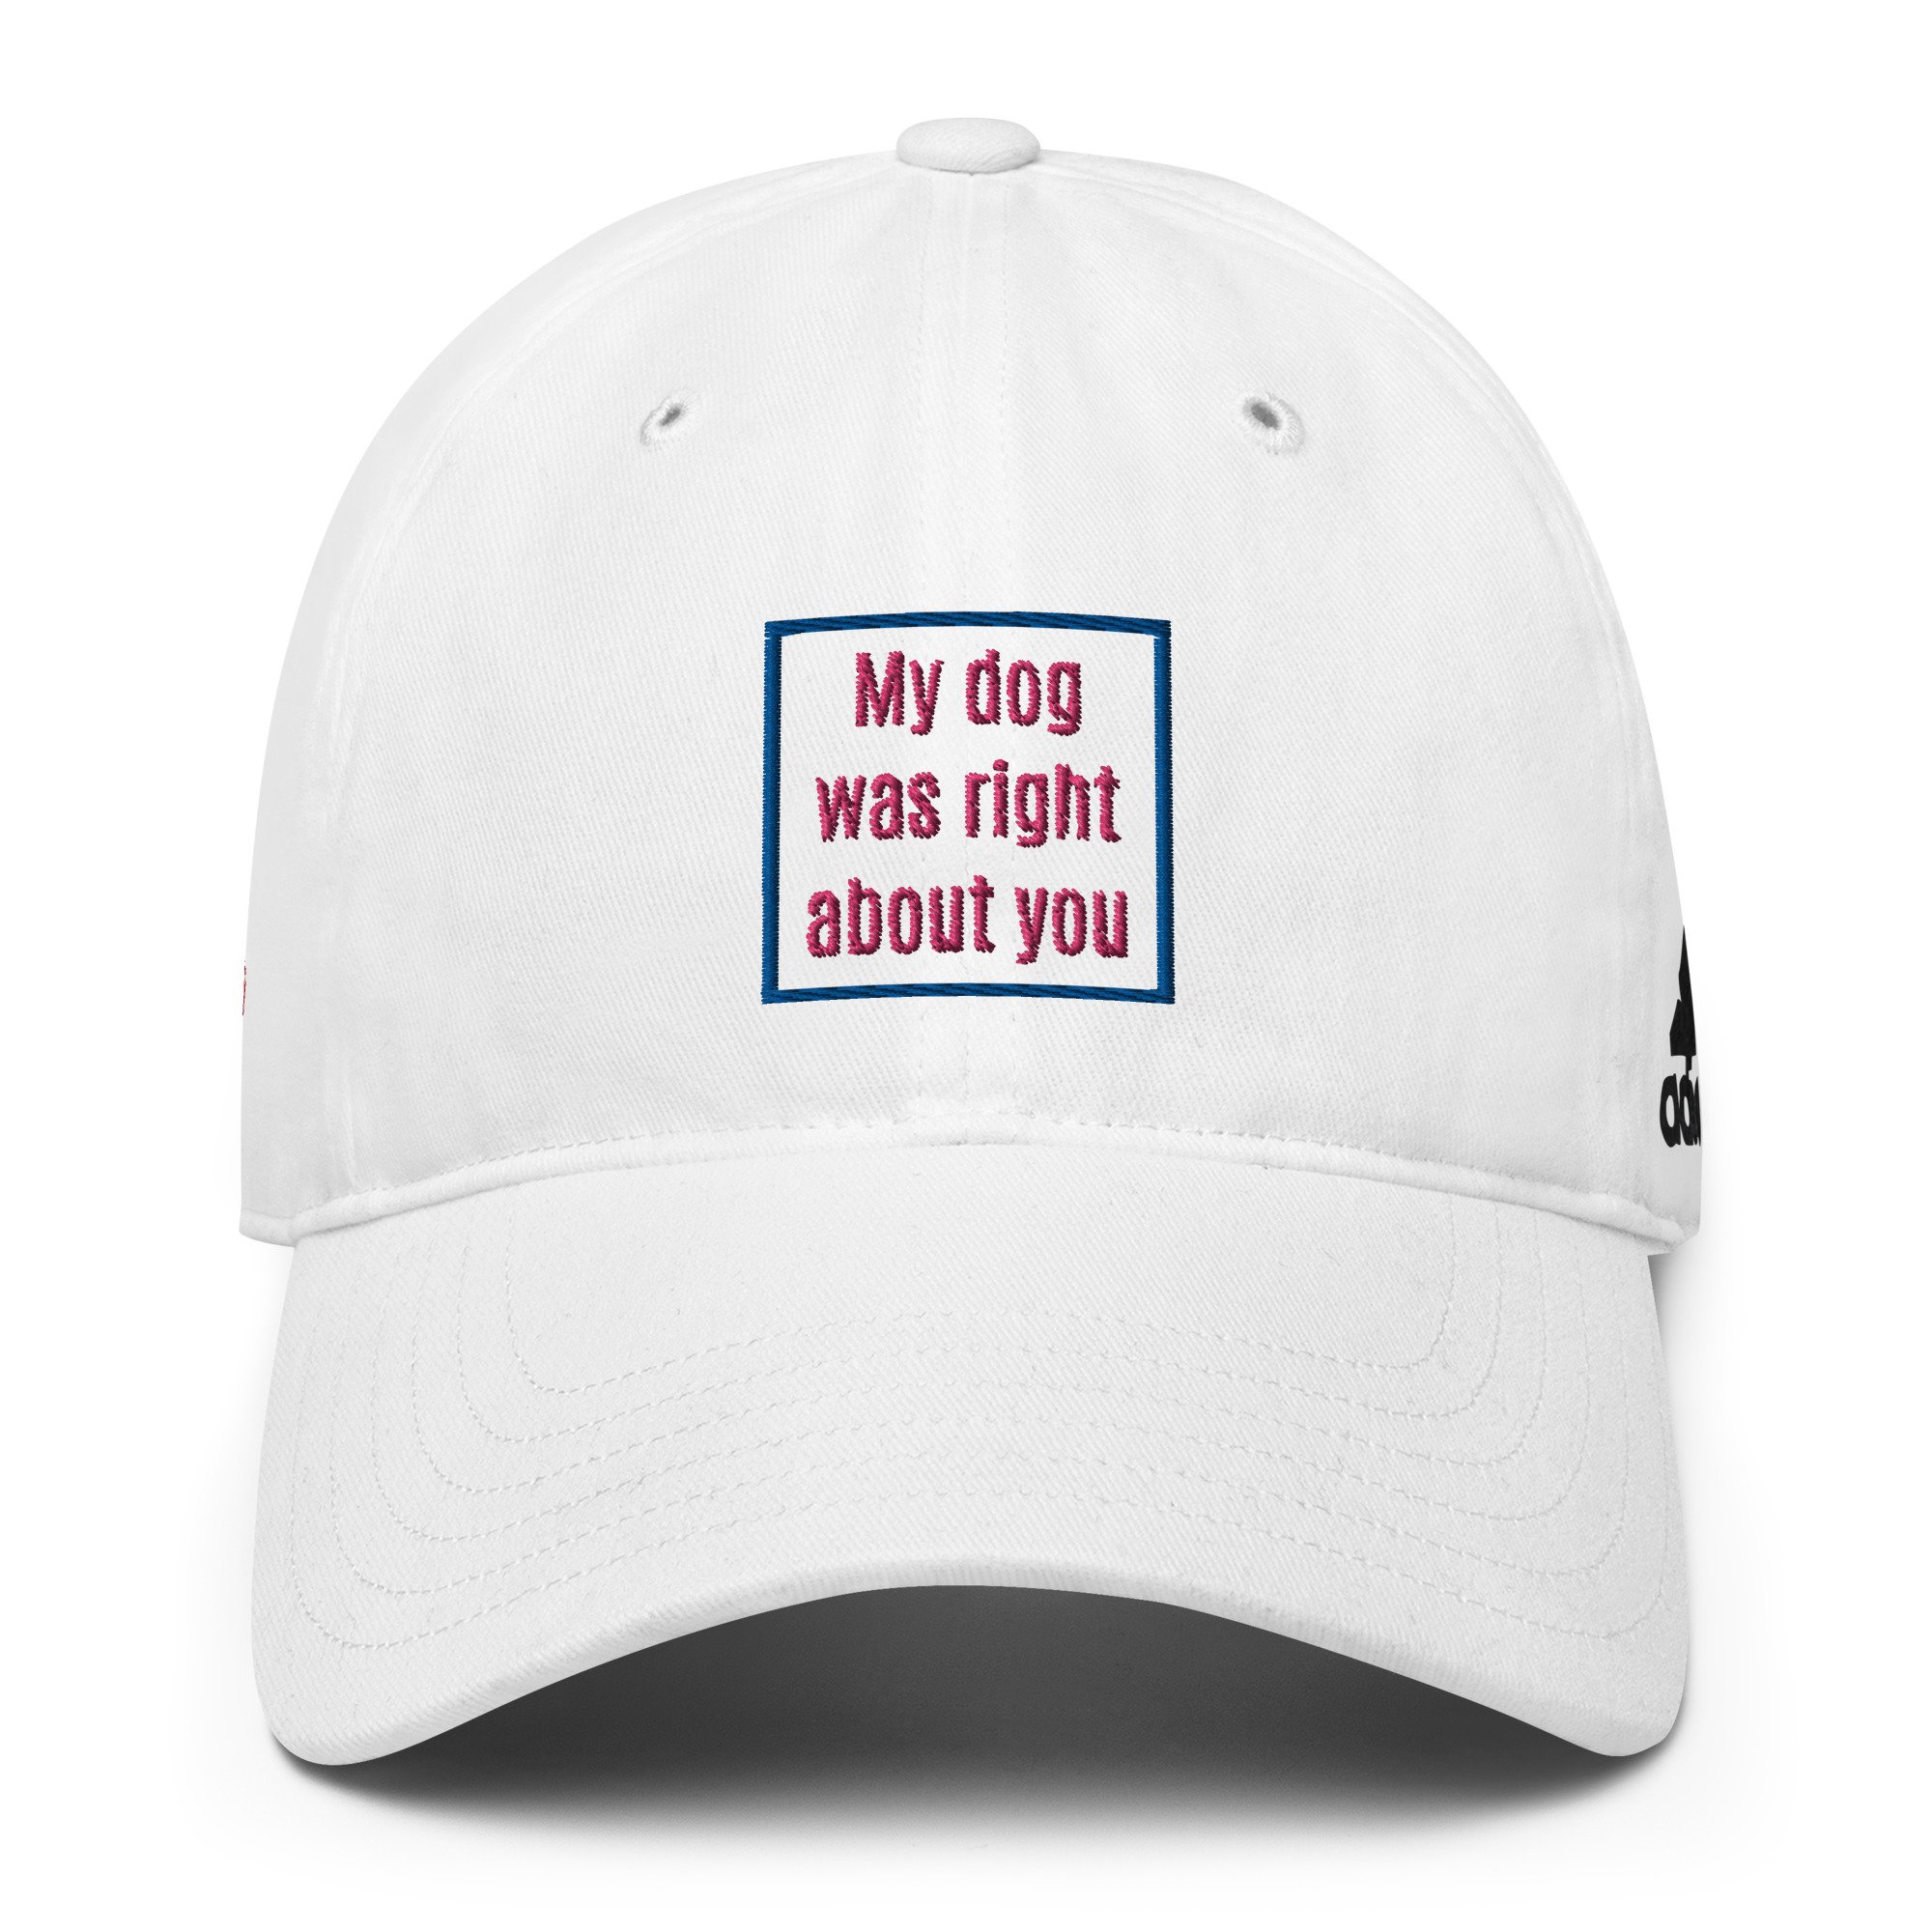 Uitbeelding Groenteboer middernacht Doggy style - Performance golf cap — DANILA